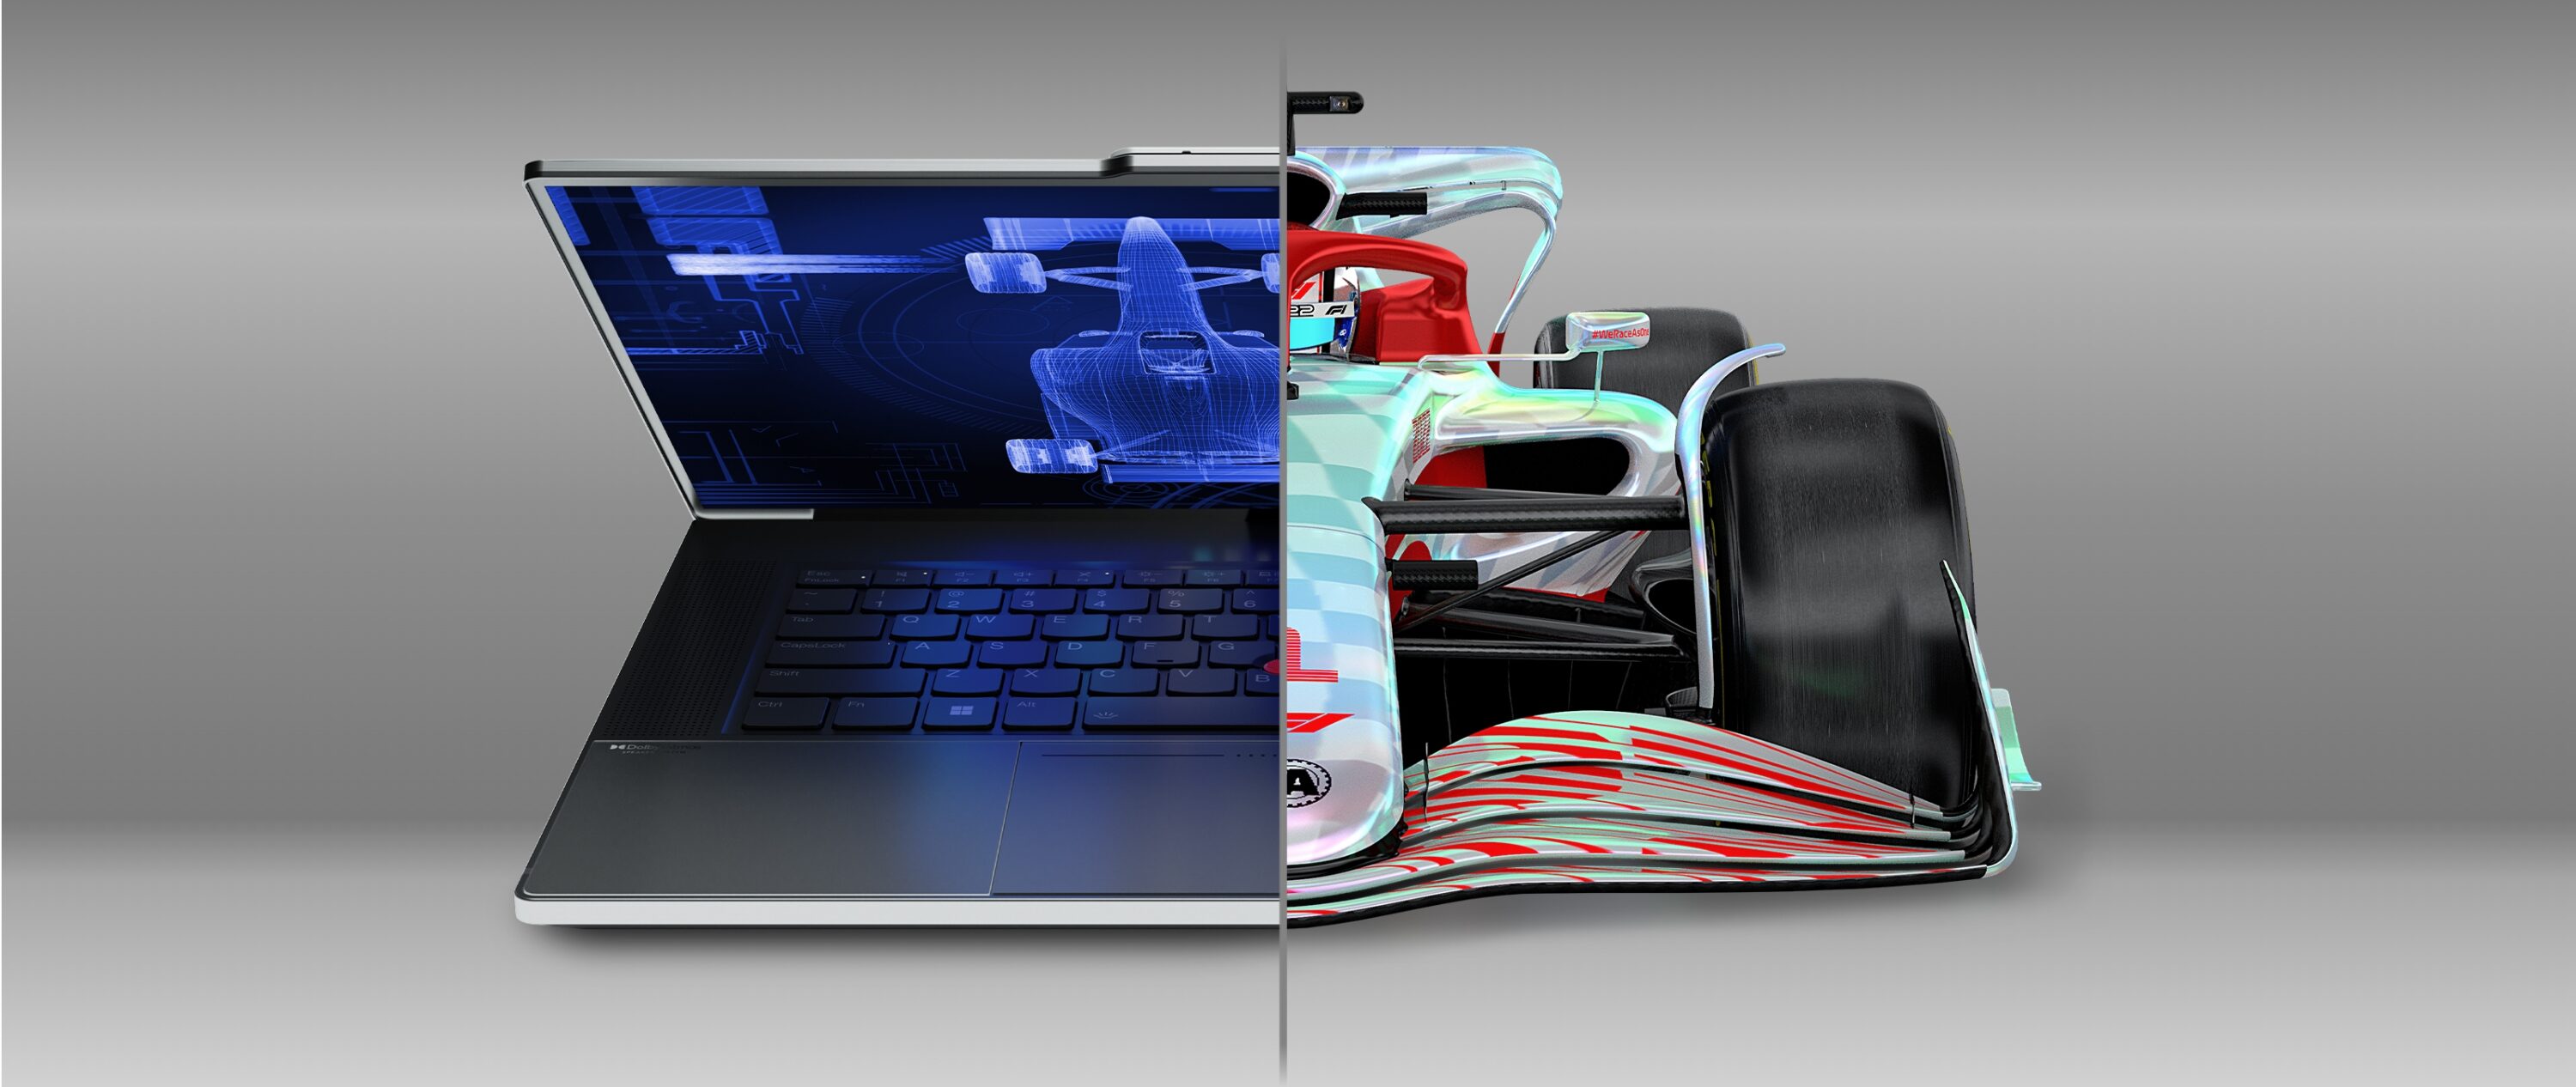 Lenovo ThinkPad and Formula 1 car.